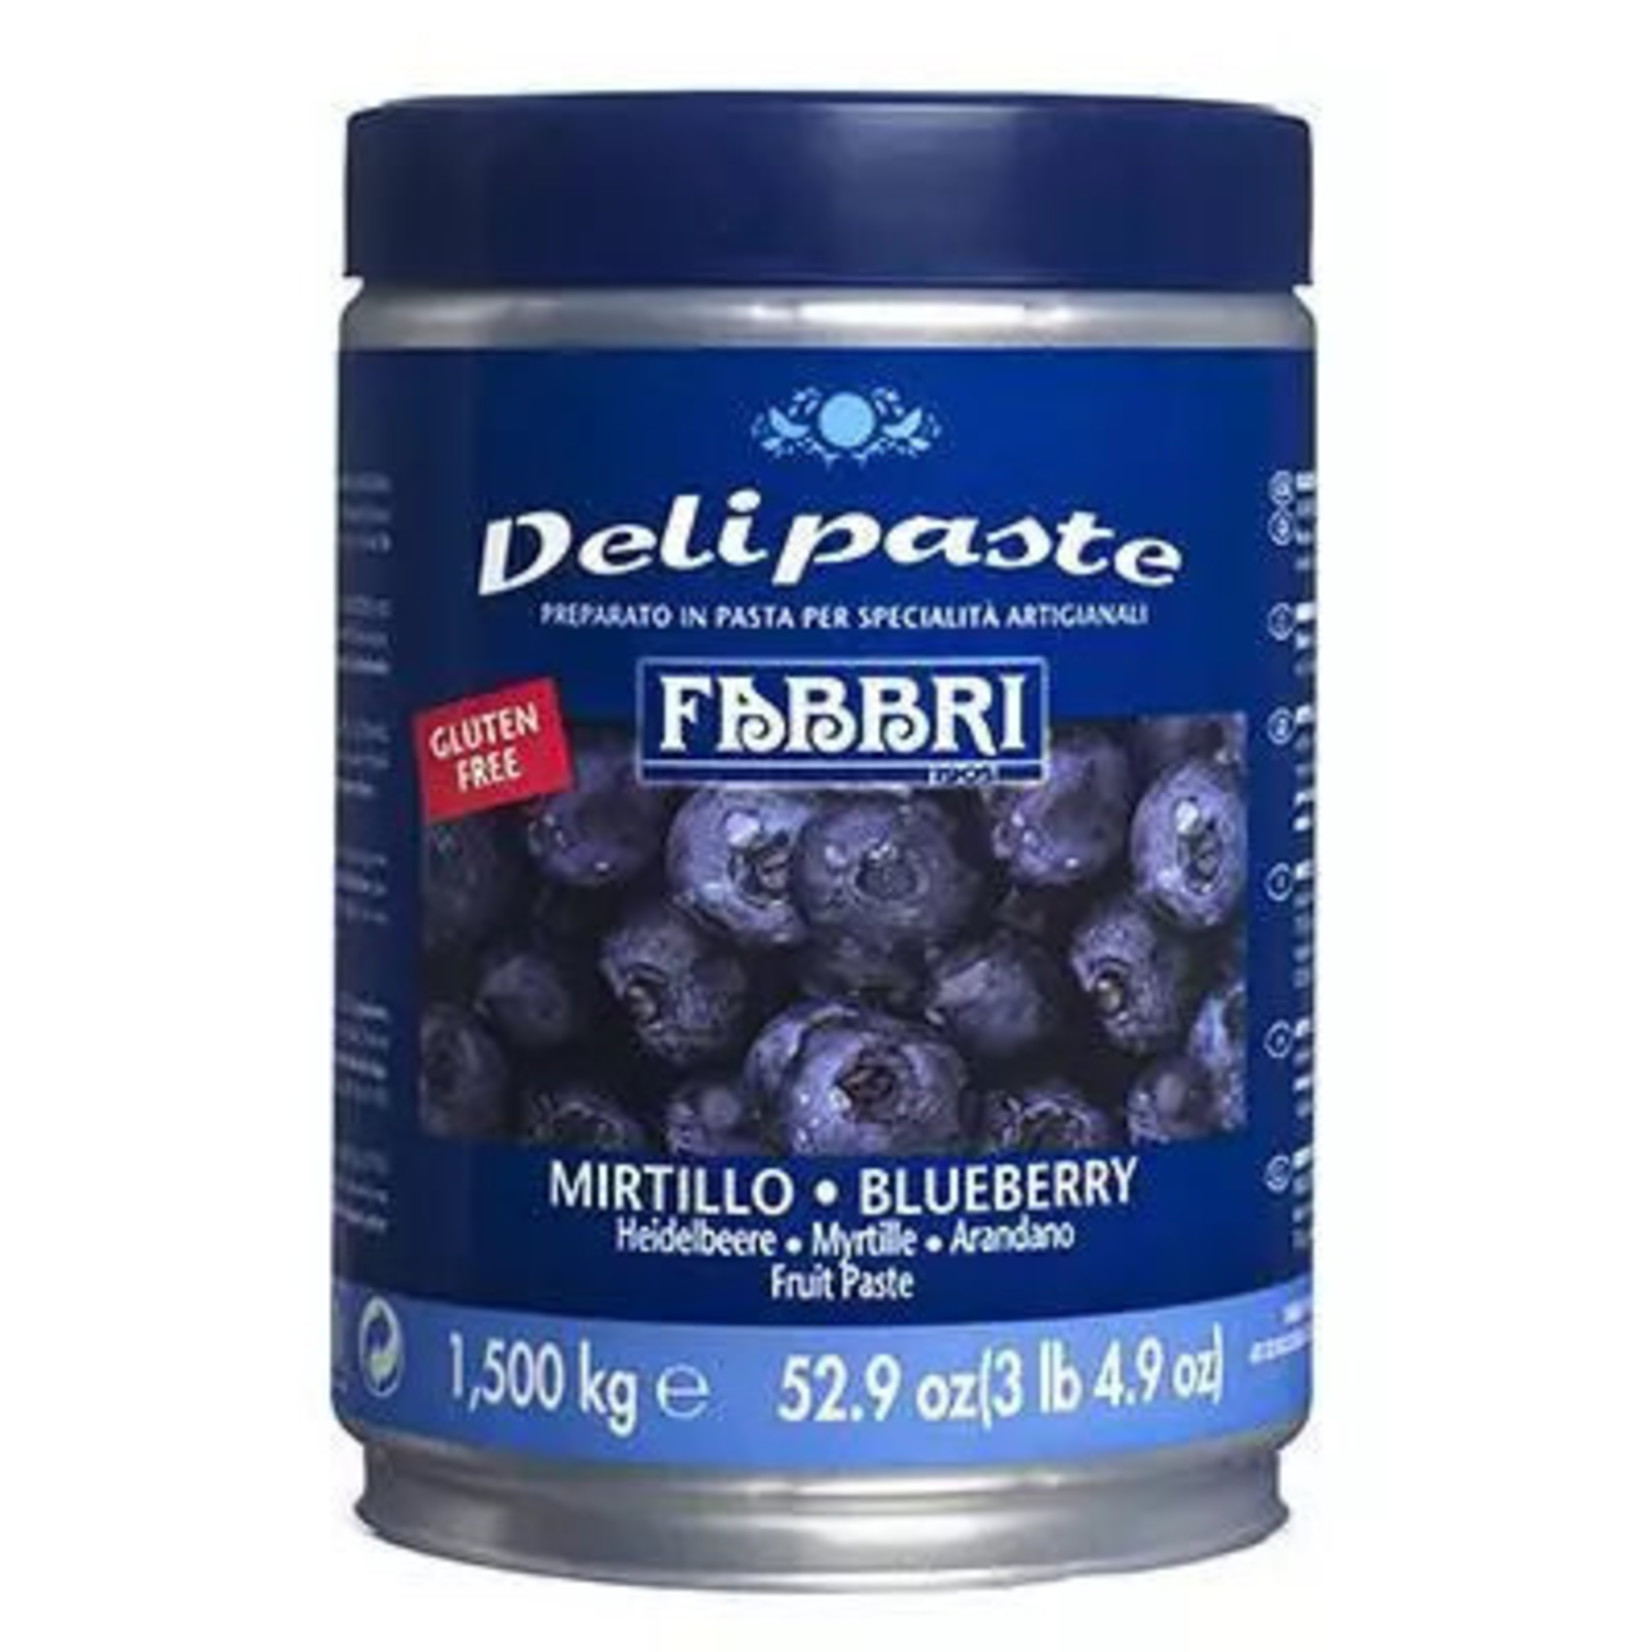 Fabbri Fabbri - Blueberry Delipaste - 1.5kg, 9225774-22C